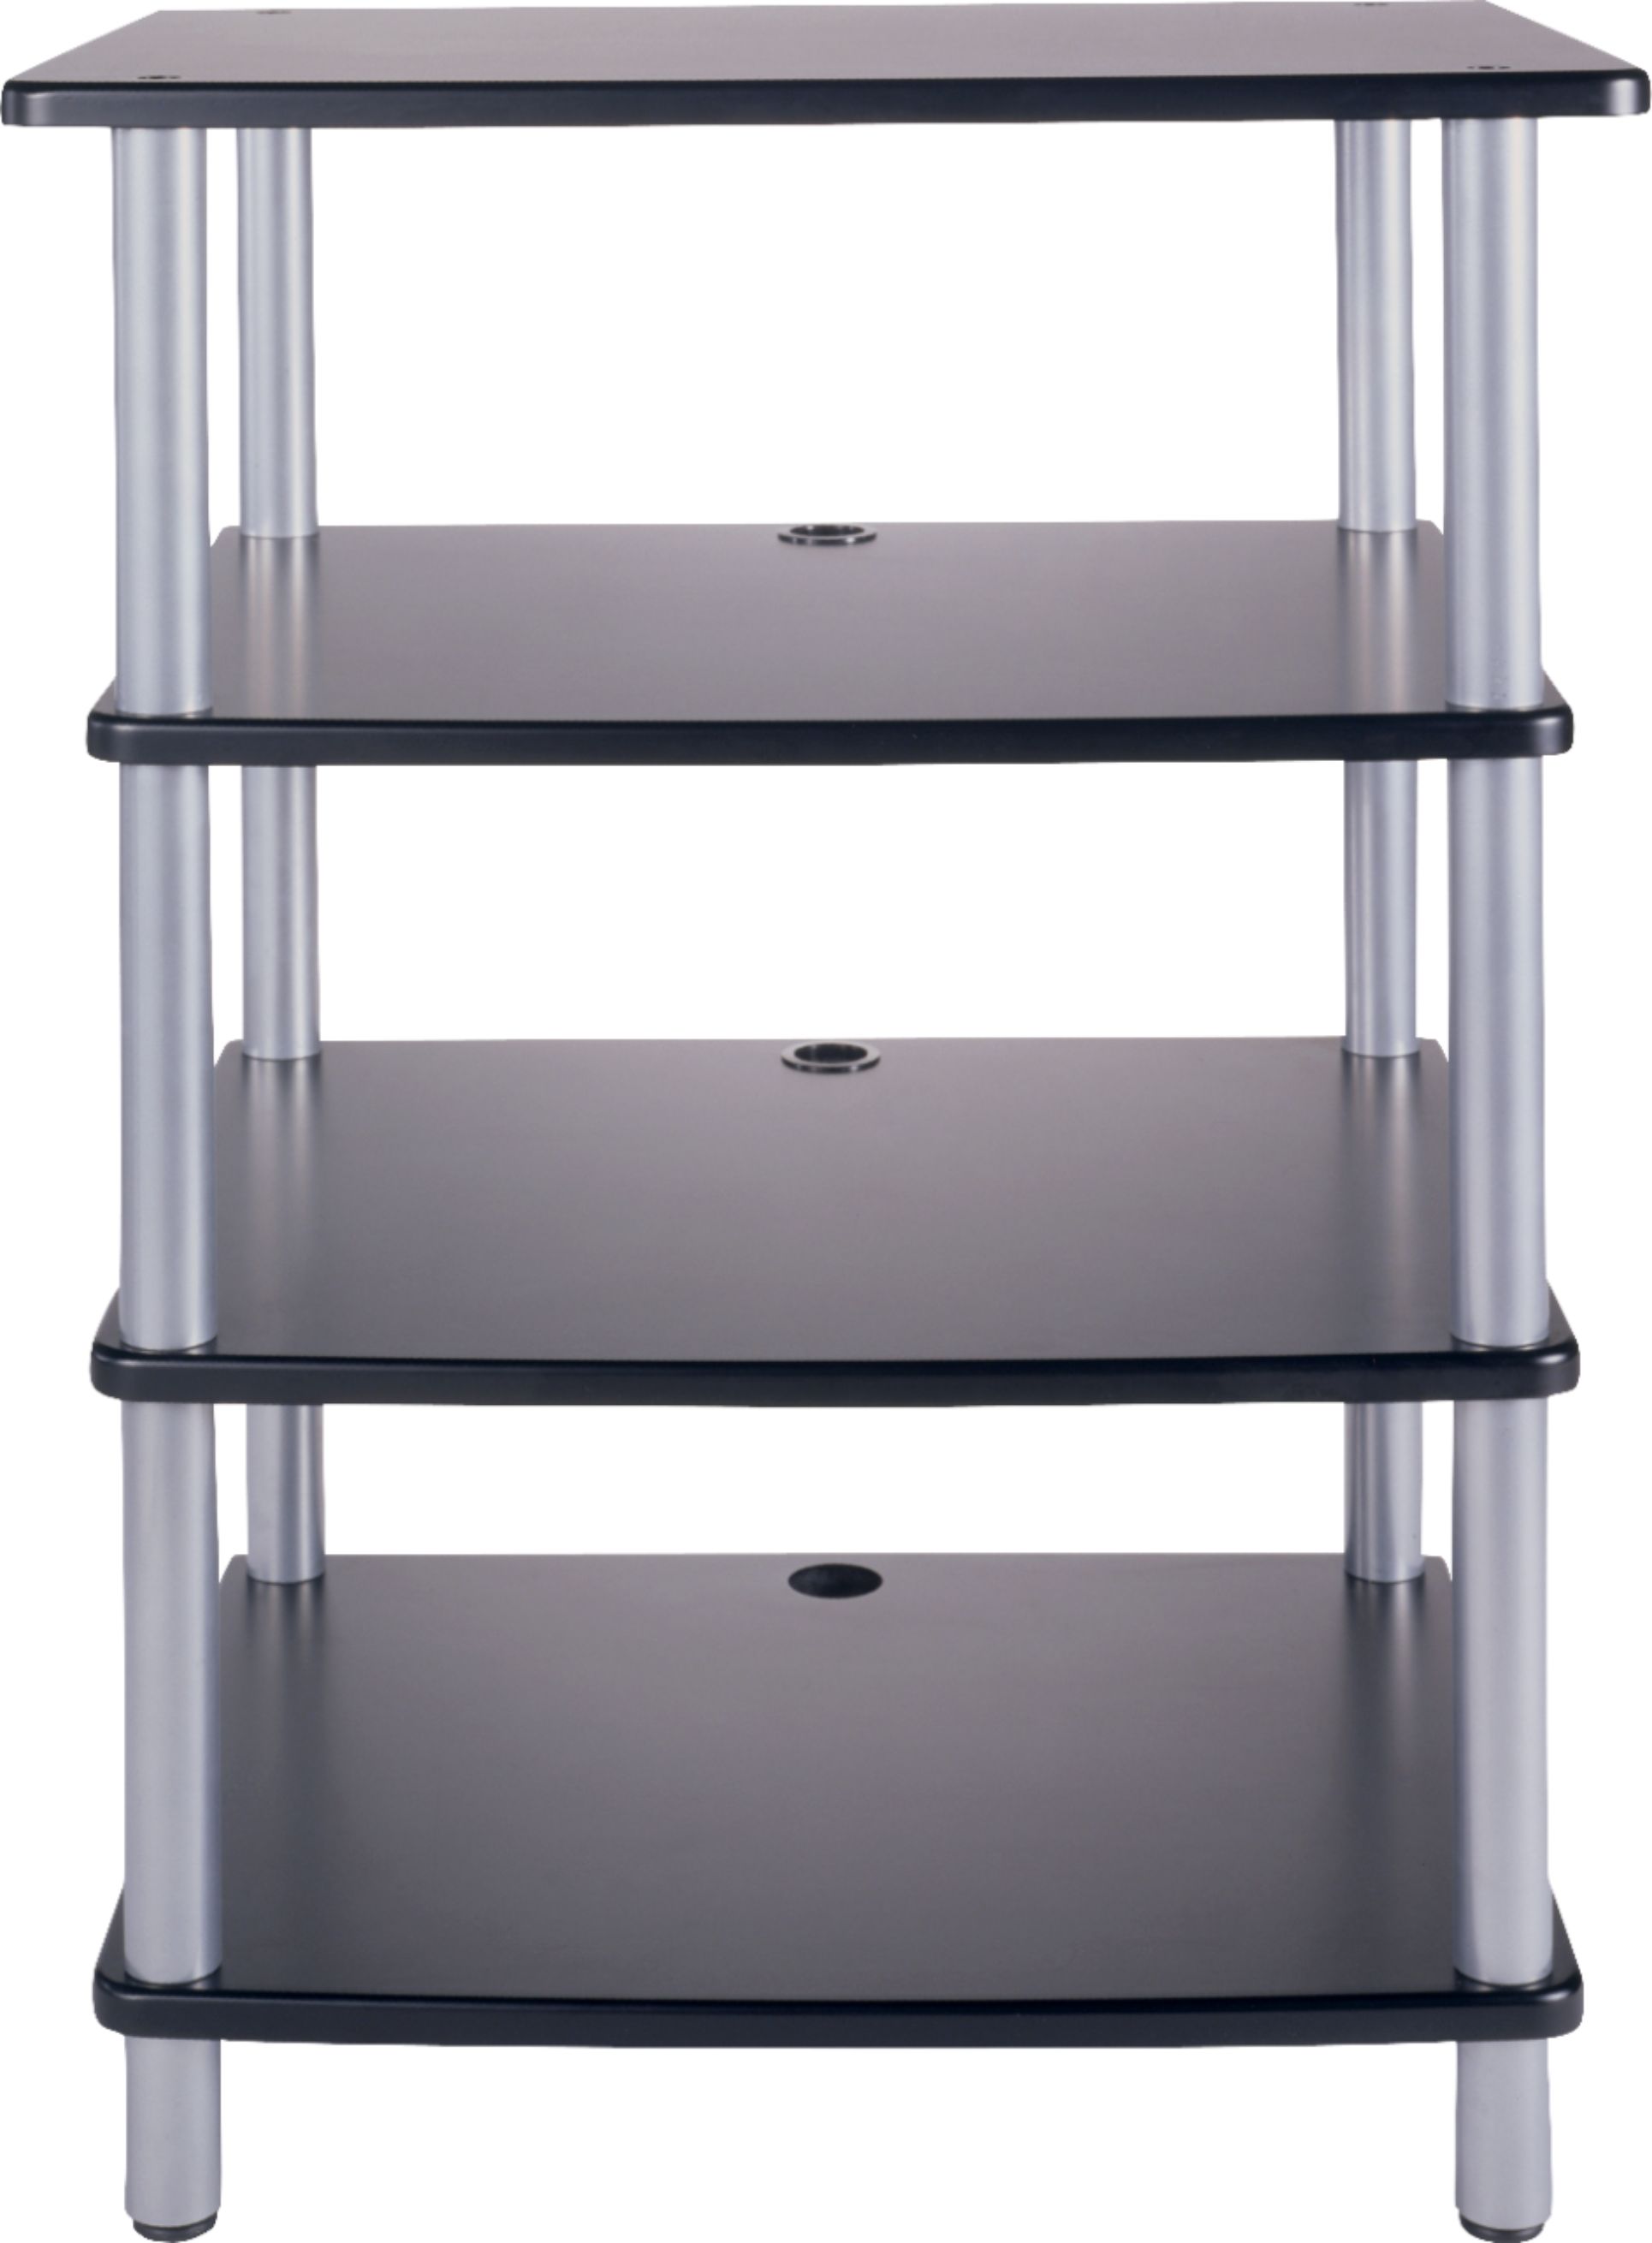 Angle View: Sanus - 4-Shelf TV Stand To Support Custom AV Setups - Black